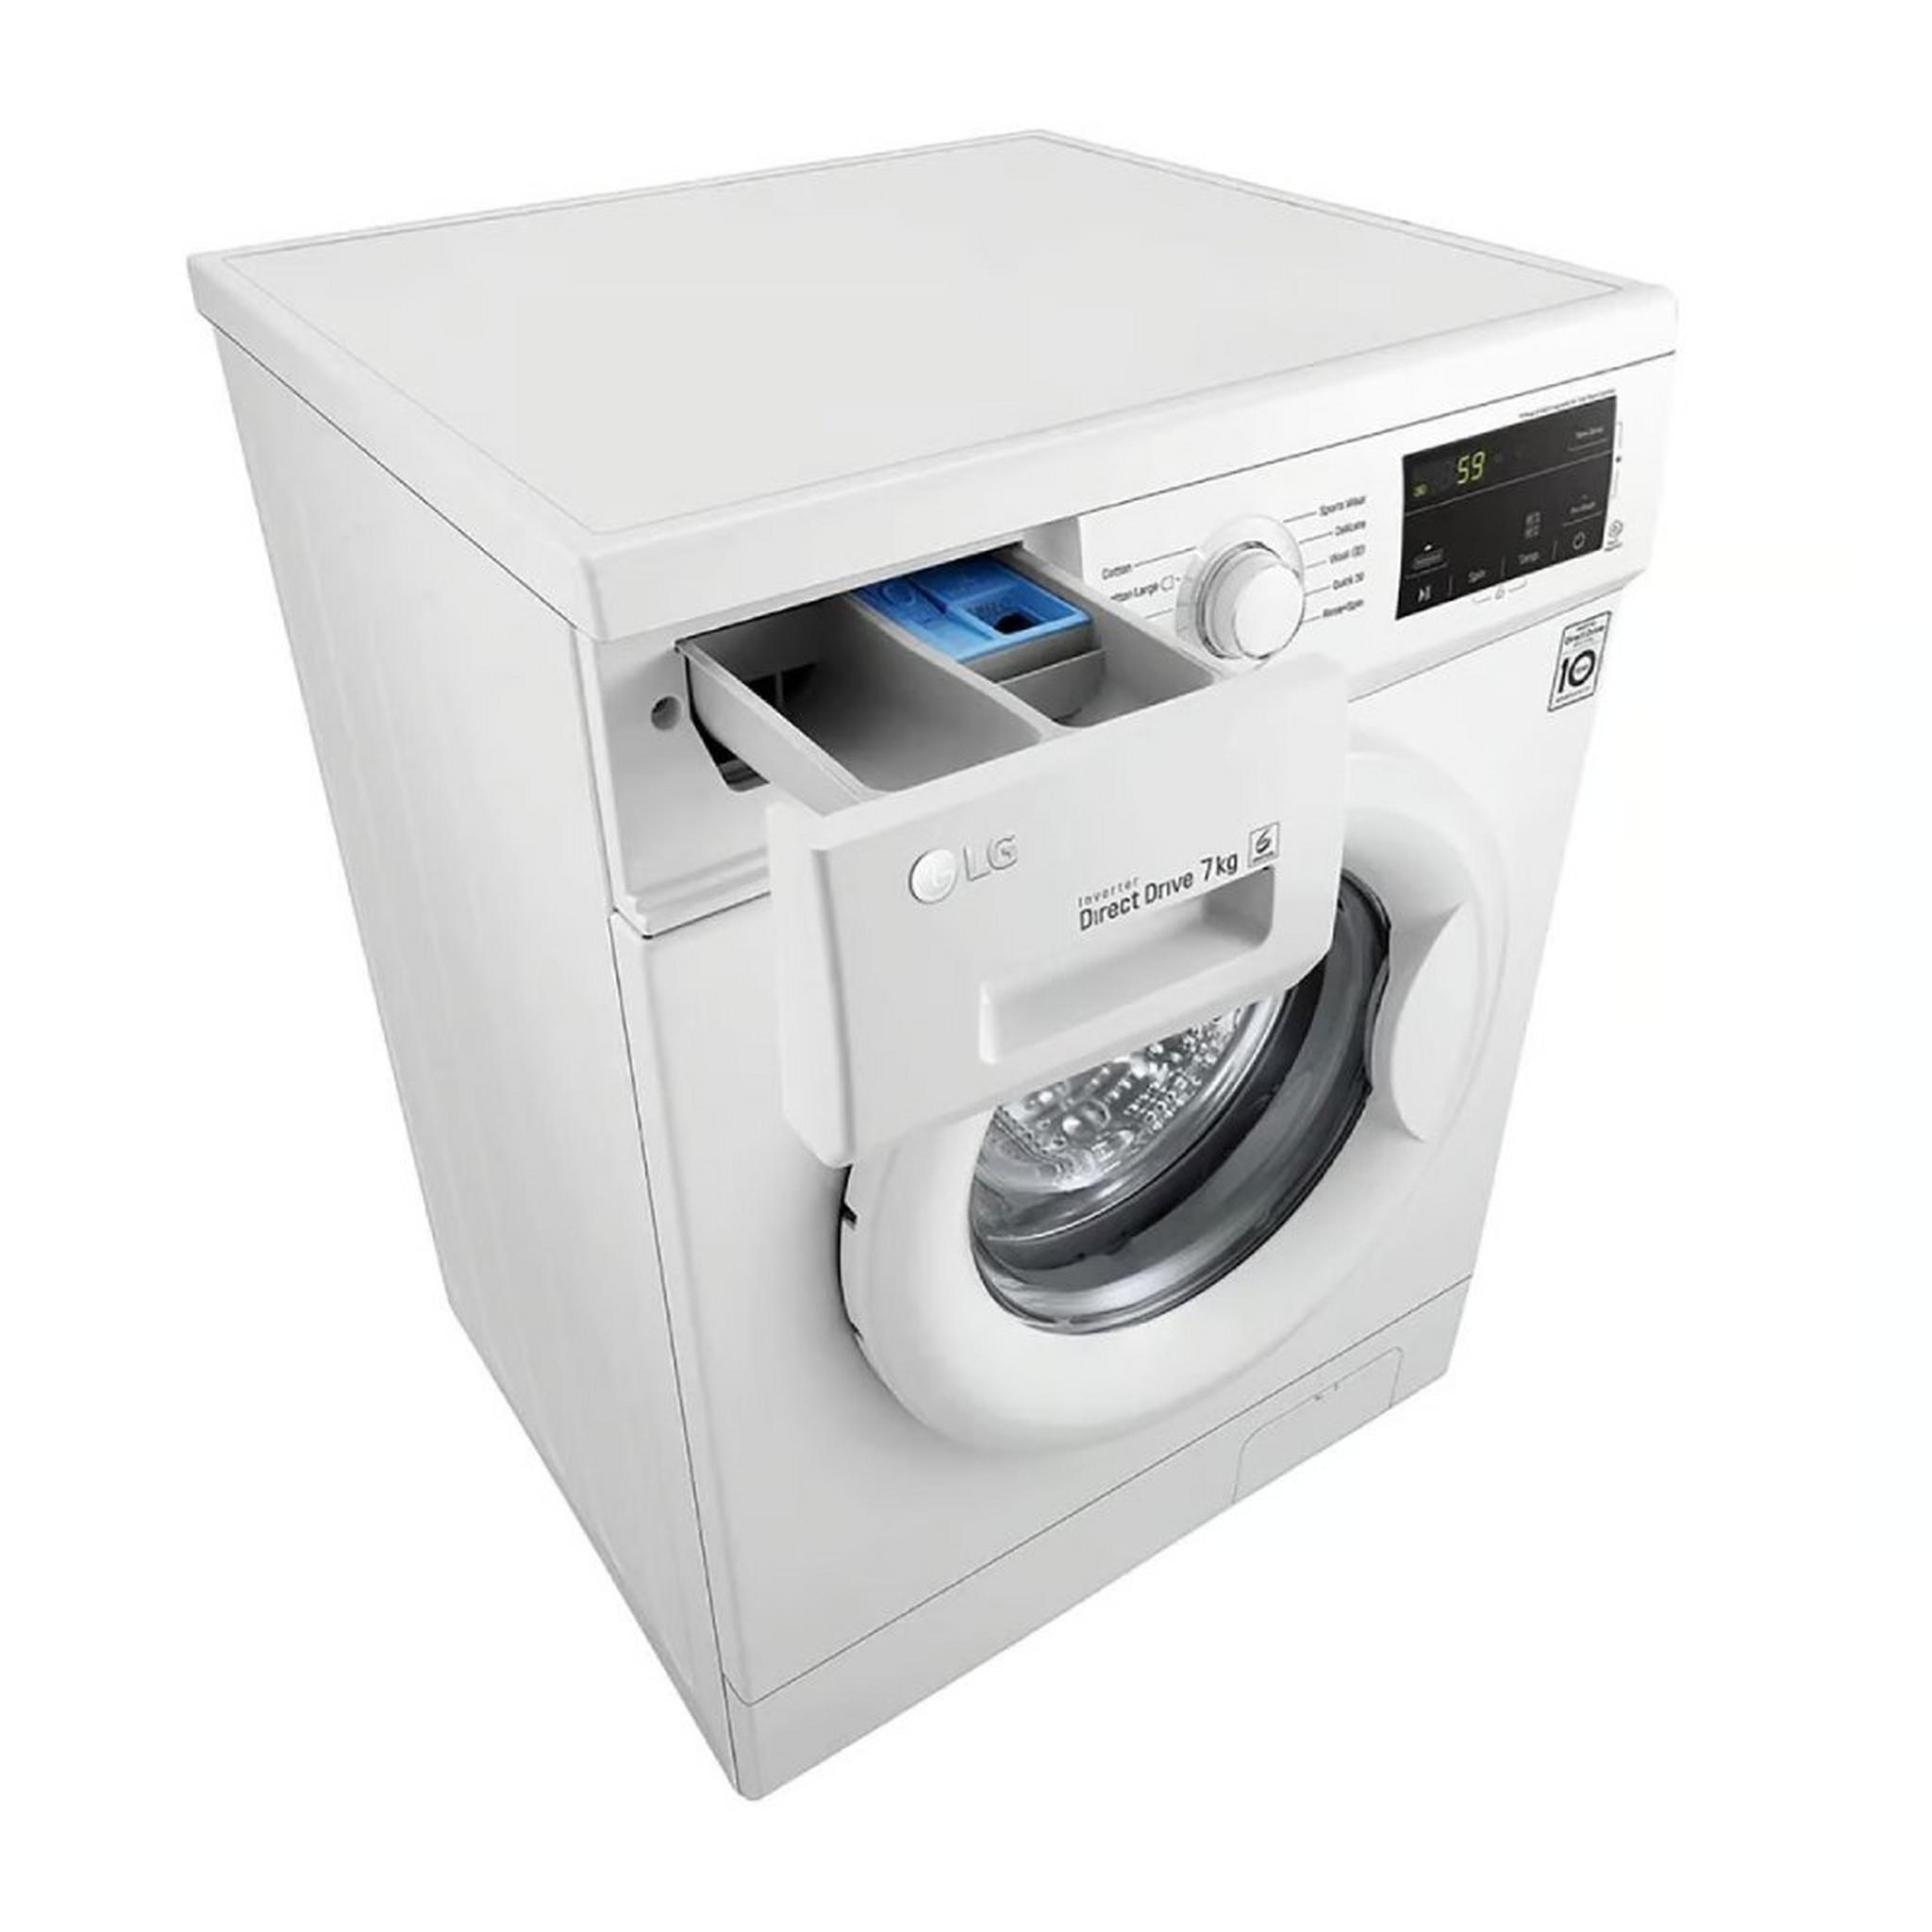 LG Front Load Washing Machine 7kg FH2J3QDNL02 - White